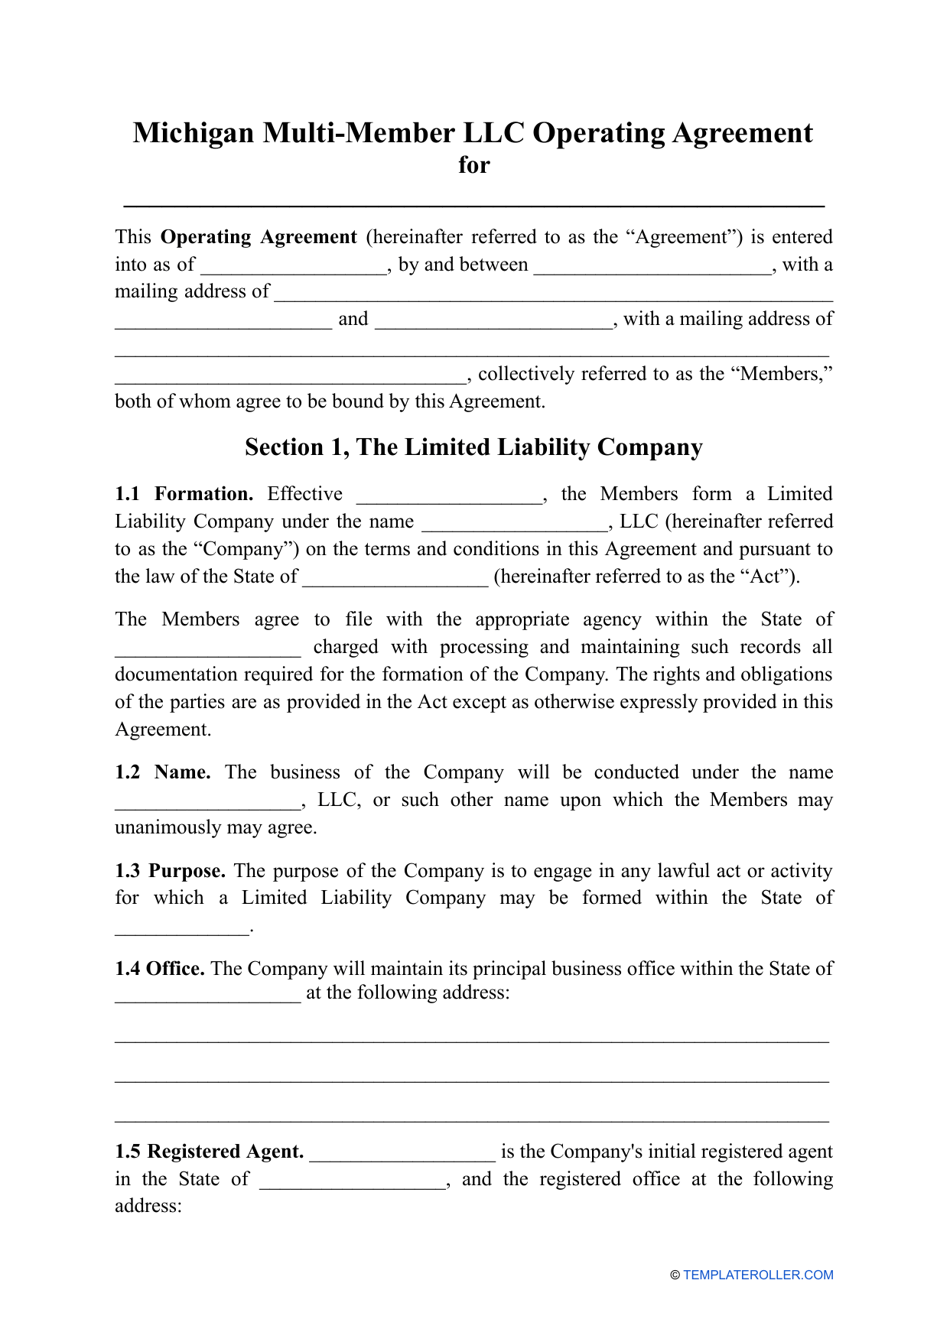 Multi-Member LLC Operating Agreement Template - Michigan, Page 1